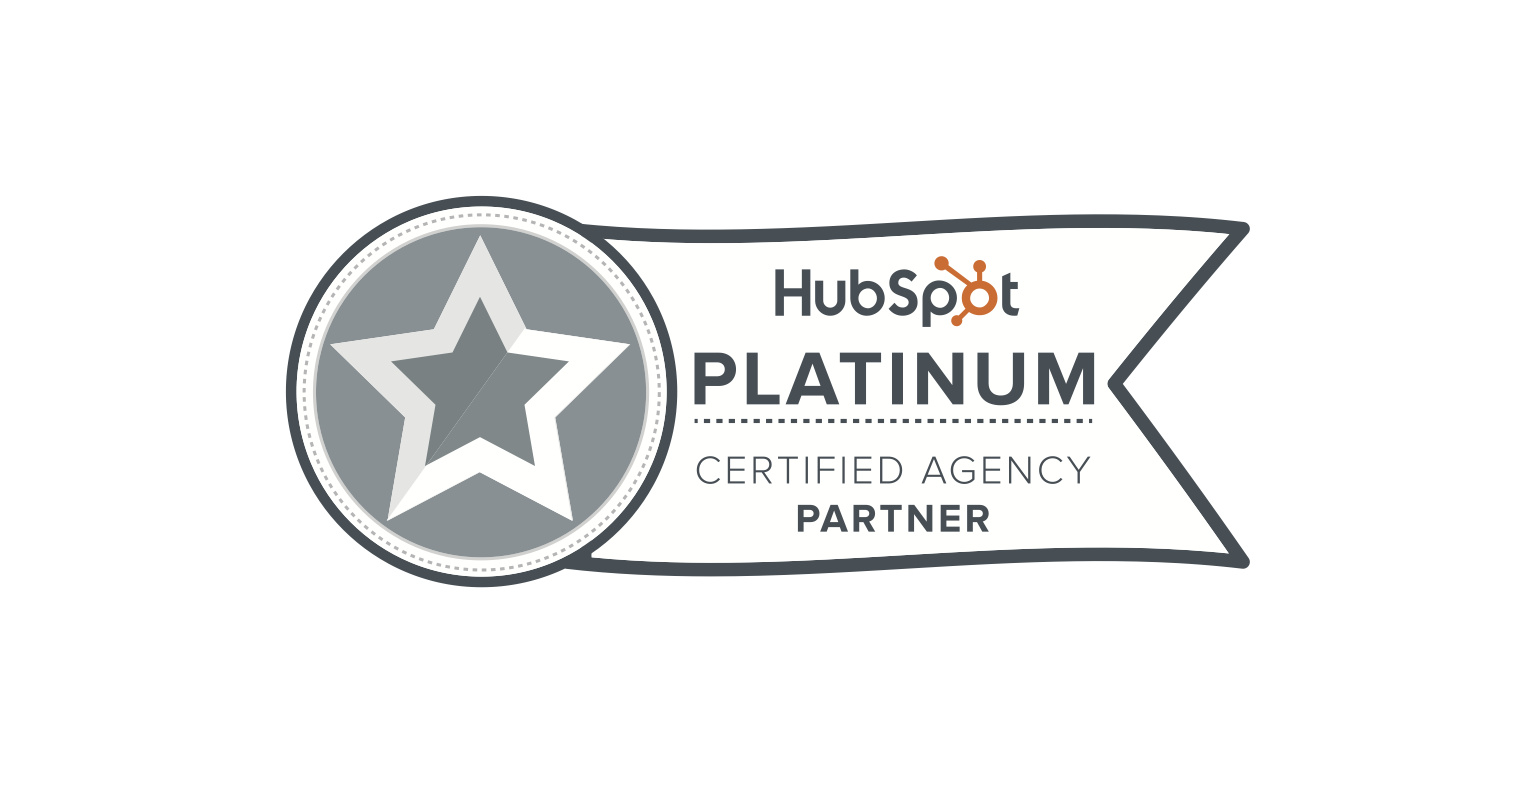 EYEMAGINE Named a HubSpot Platinum Partner Agency